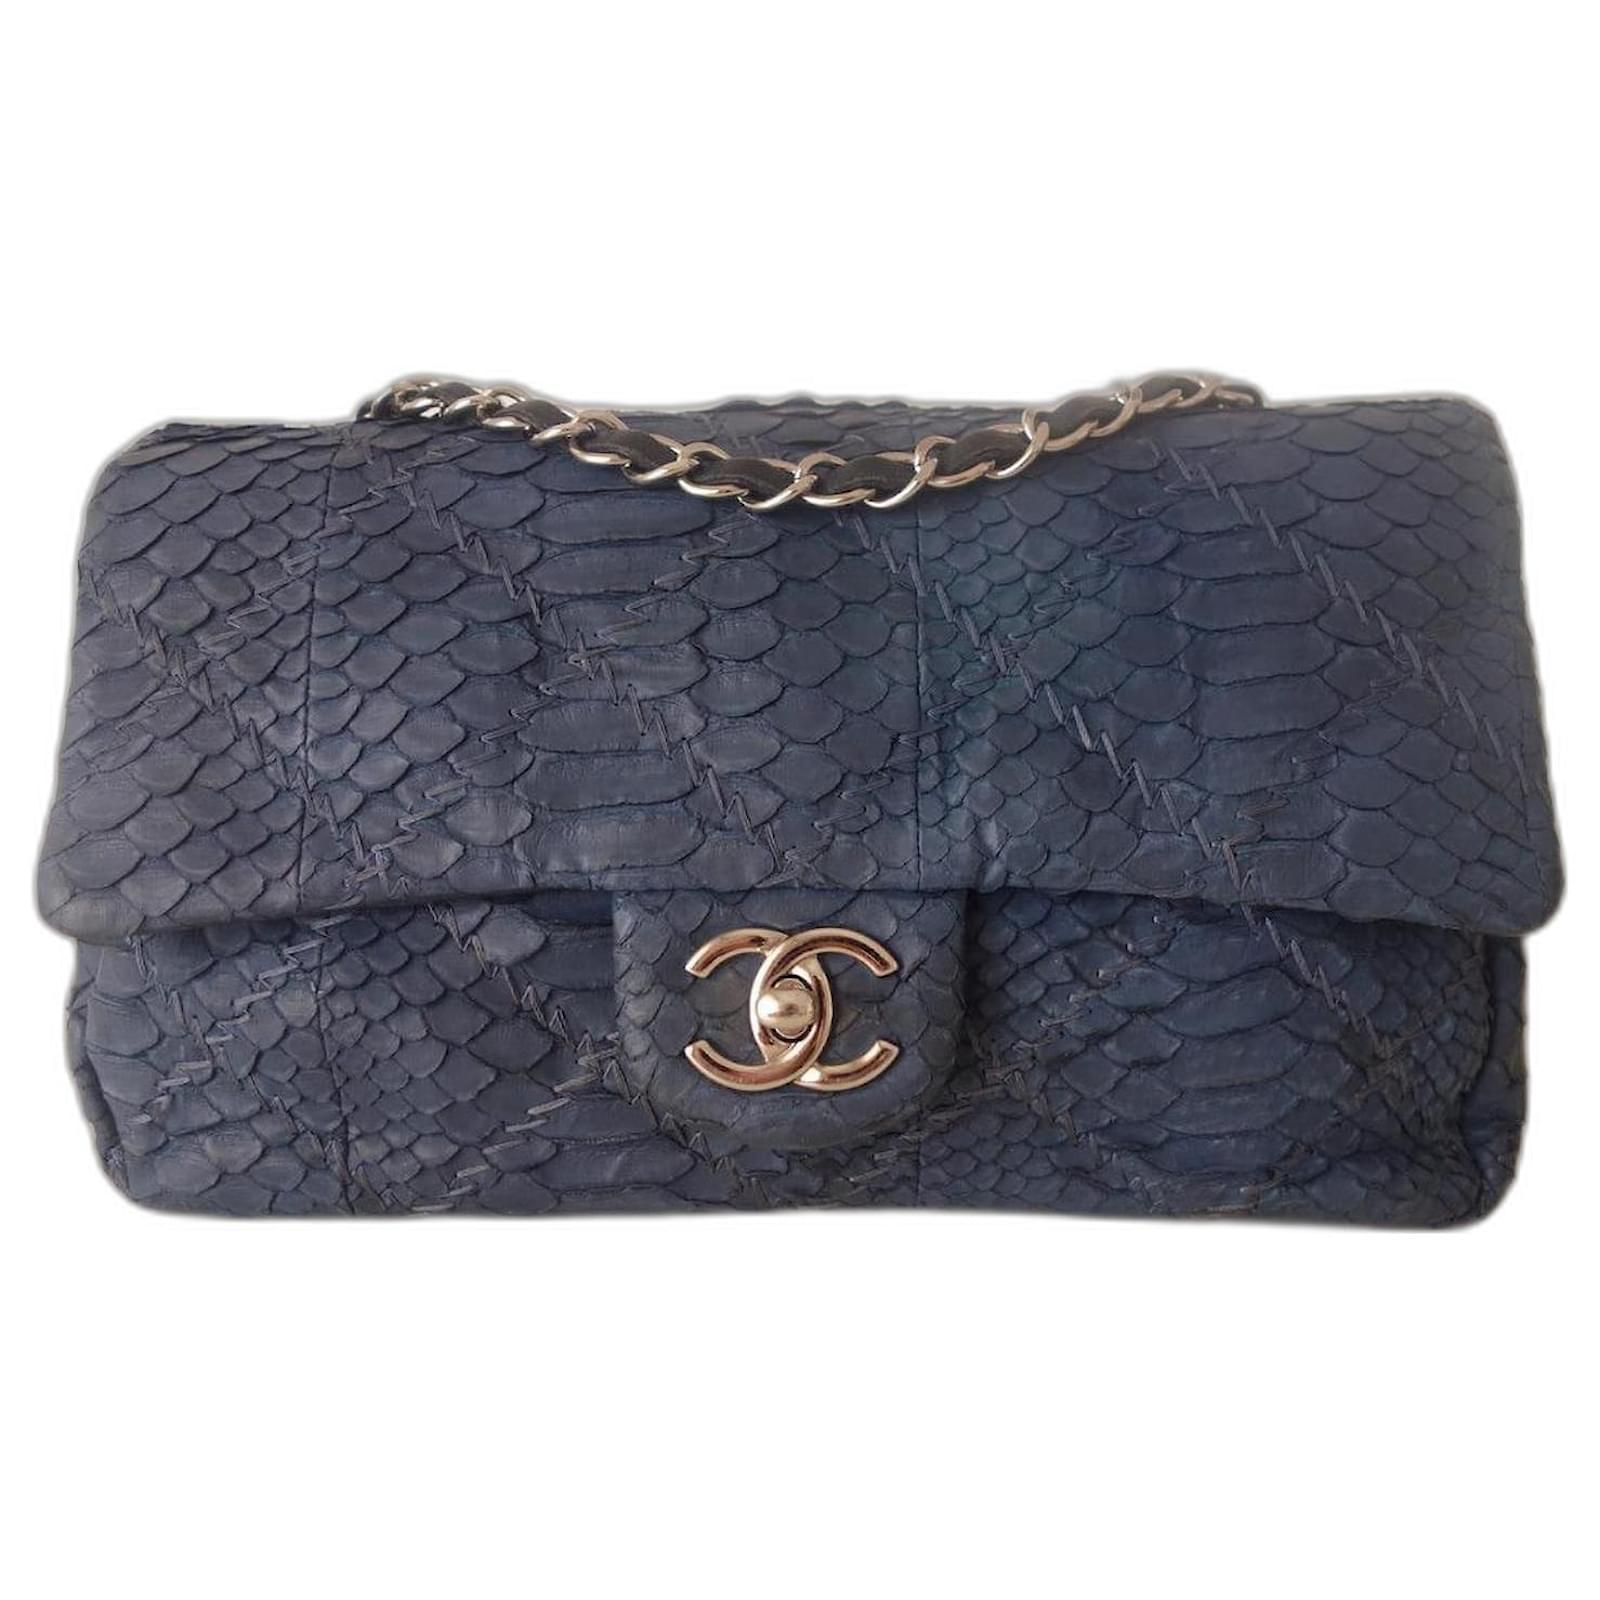 10 Reasons to Own a Chanel Flap Bag - PurseBlog